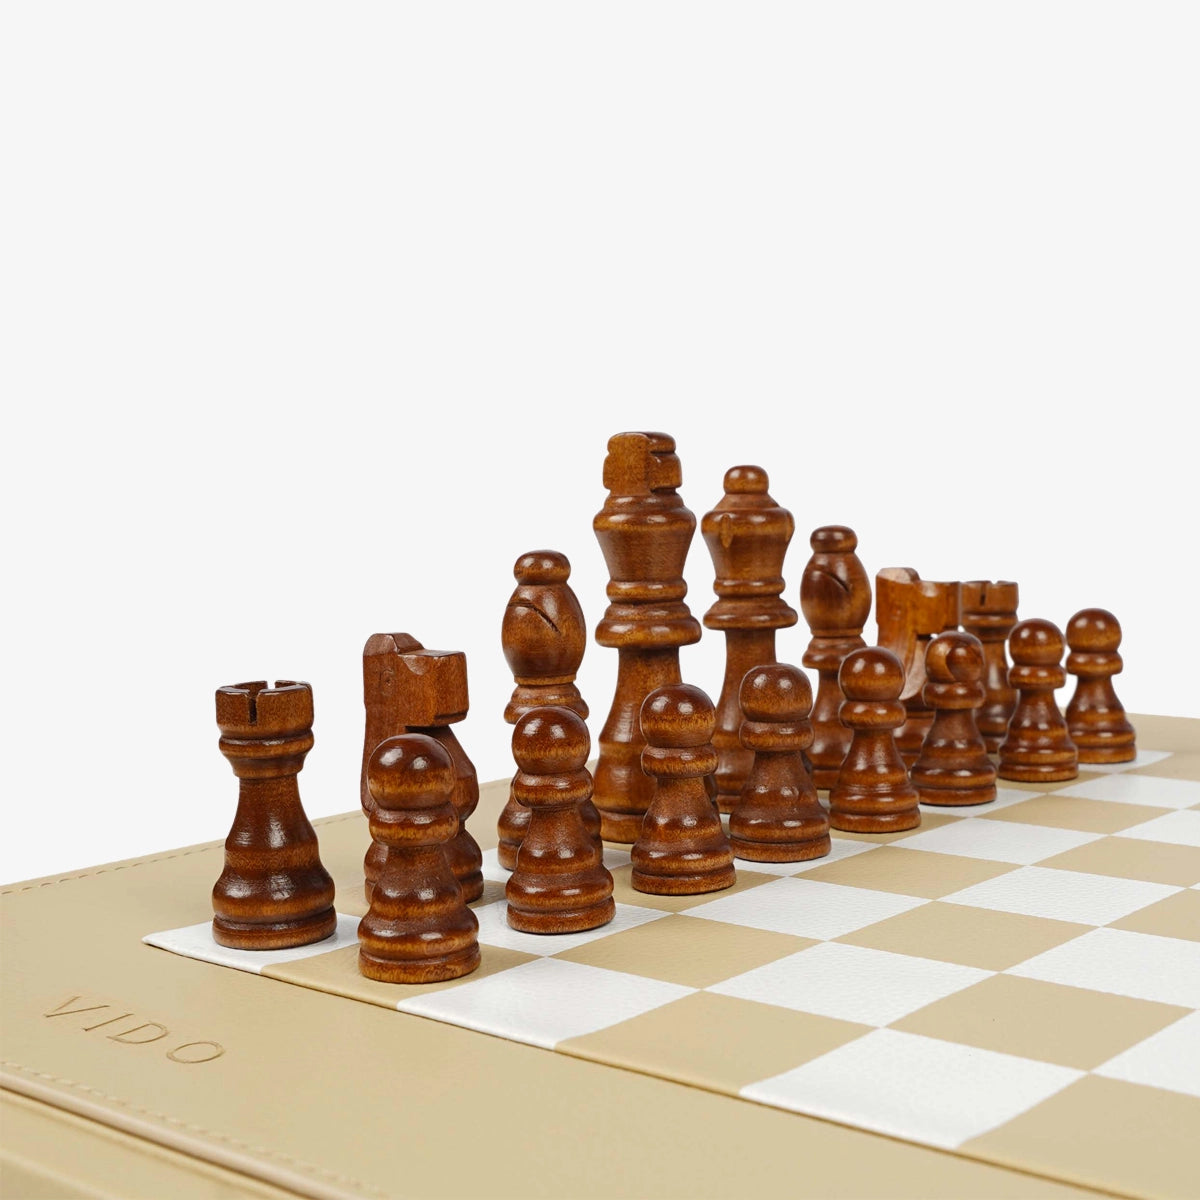 Sand Beige Chess Set - VIDO USA